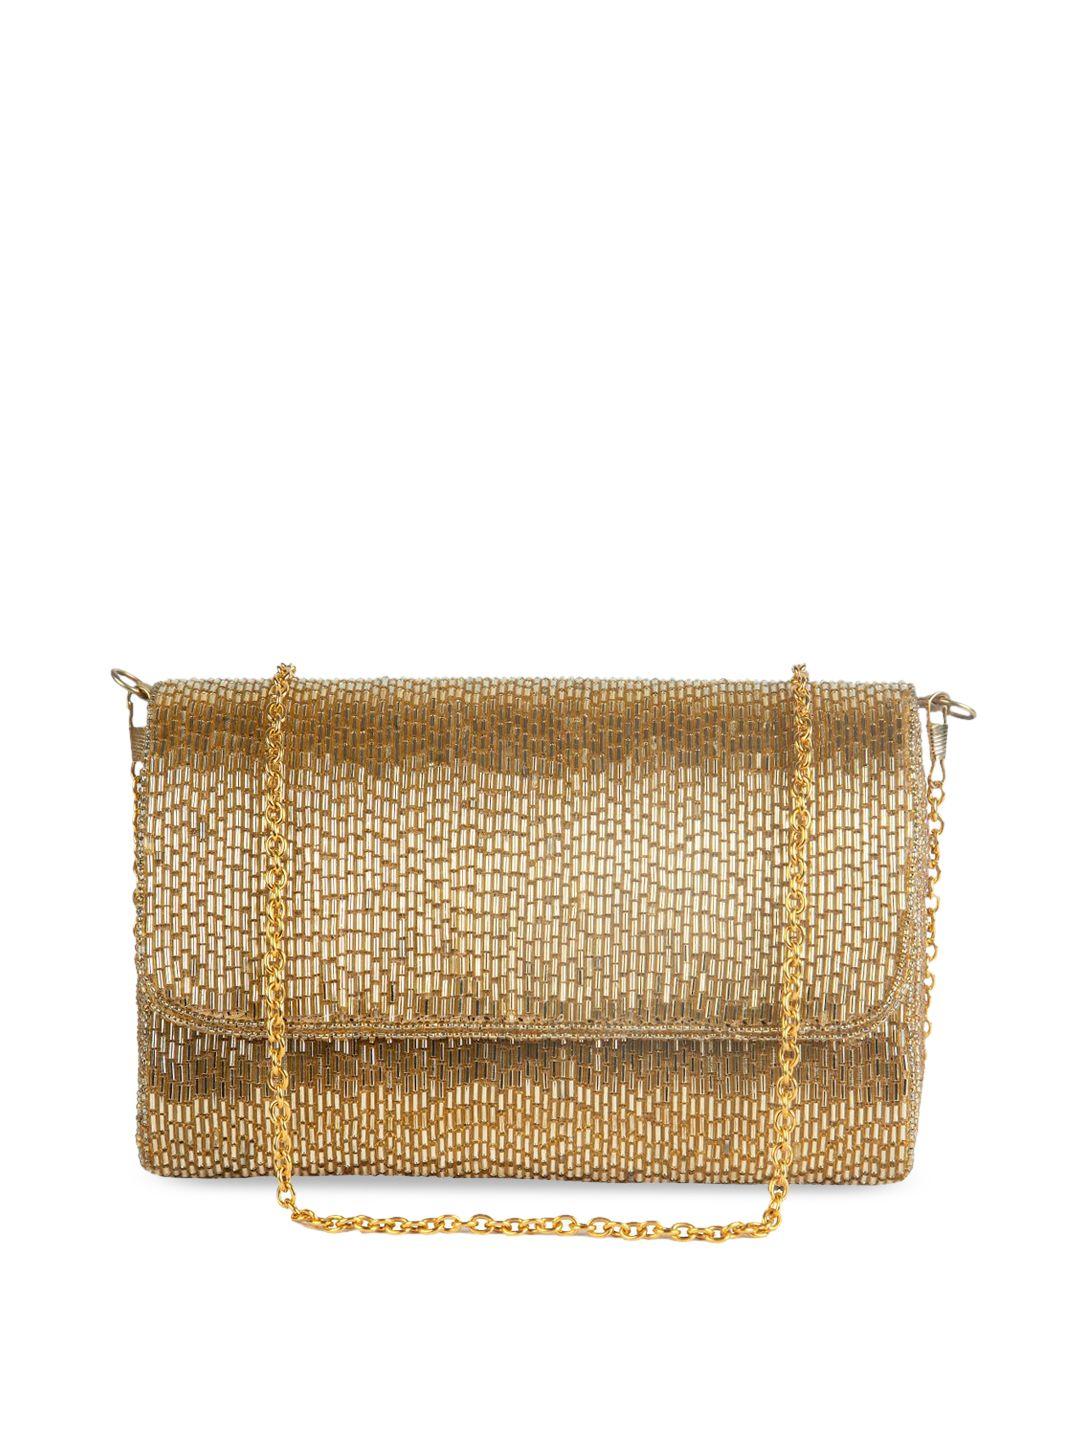 tarini nirula embellished structured sling bag